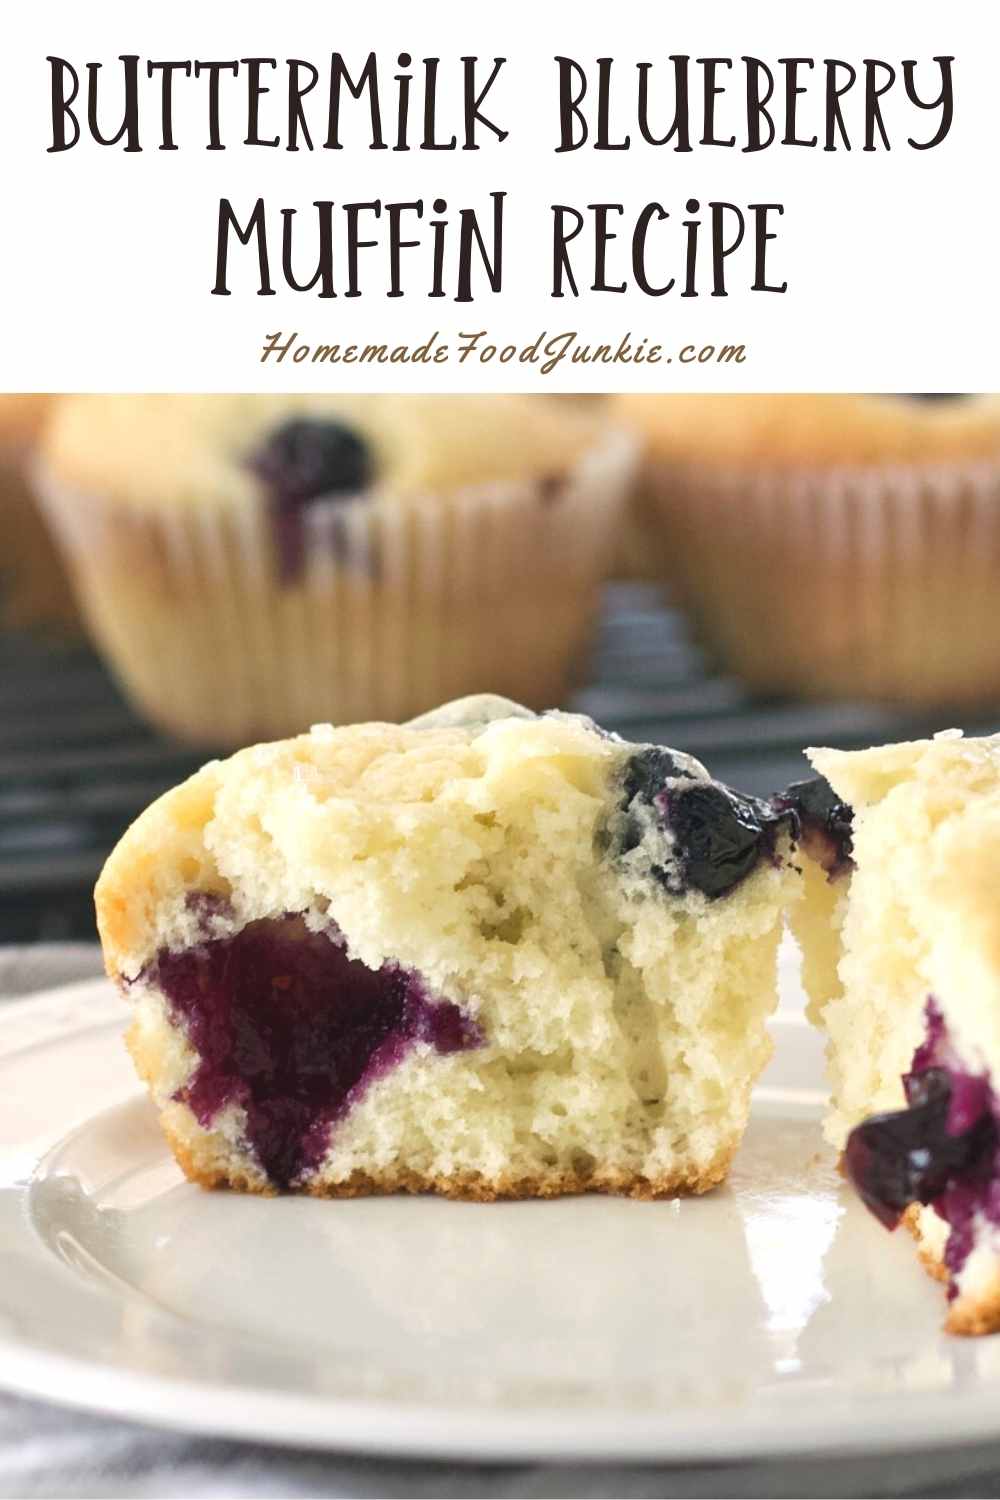 Buttermilk Blueberry Muffin Recipe-Pin Image